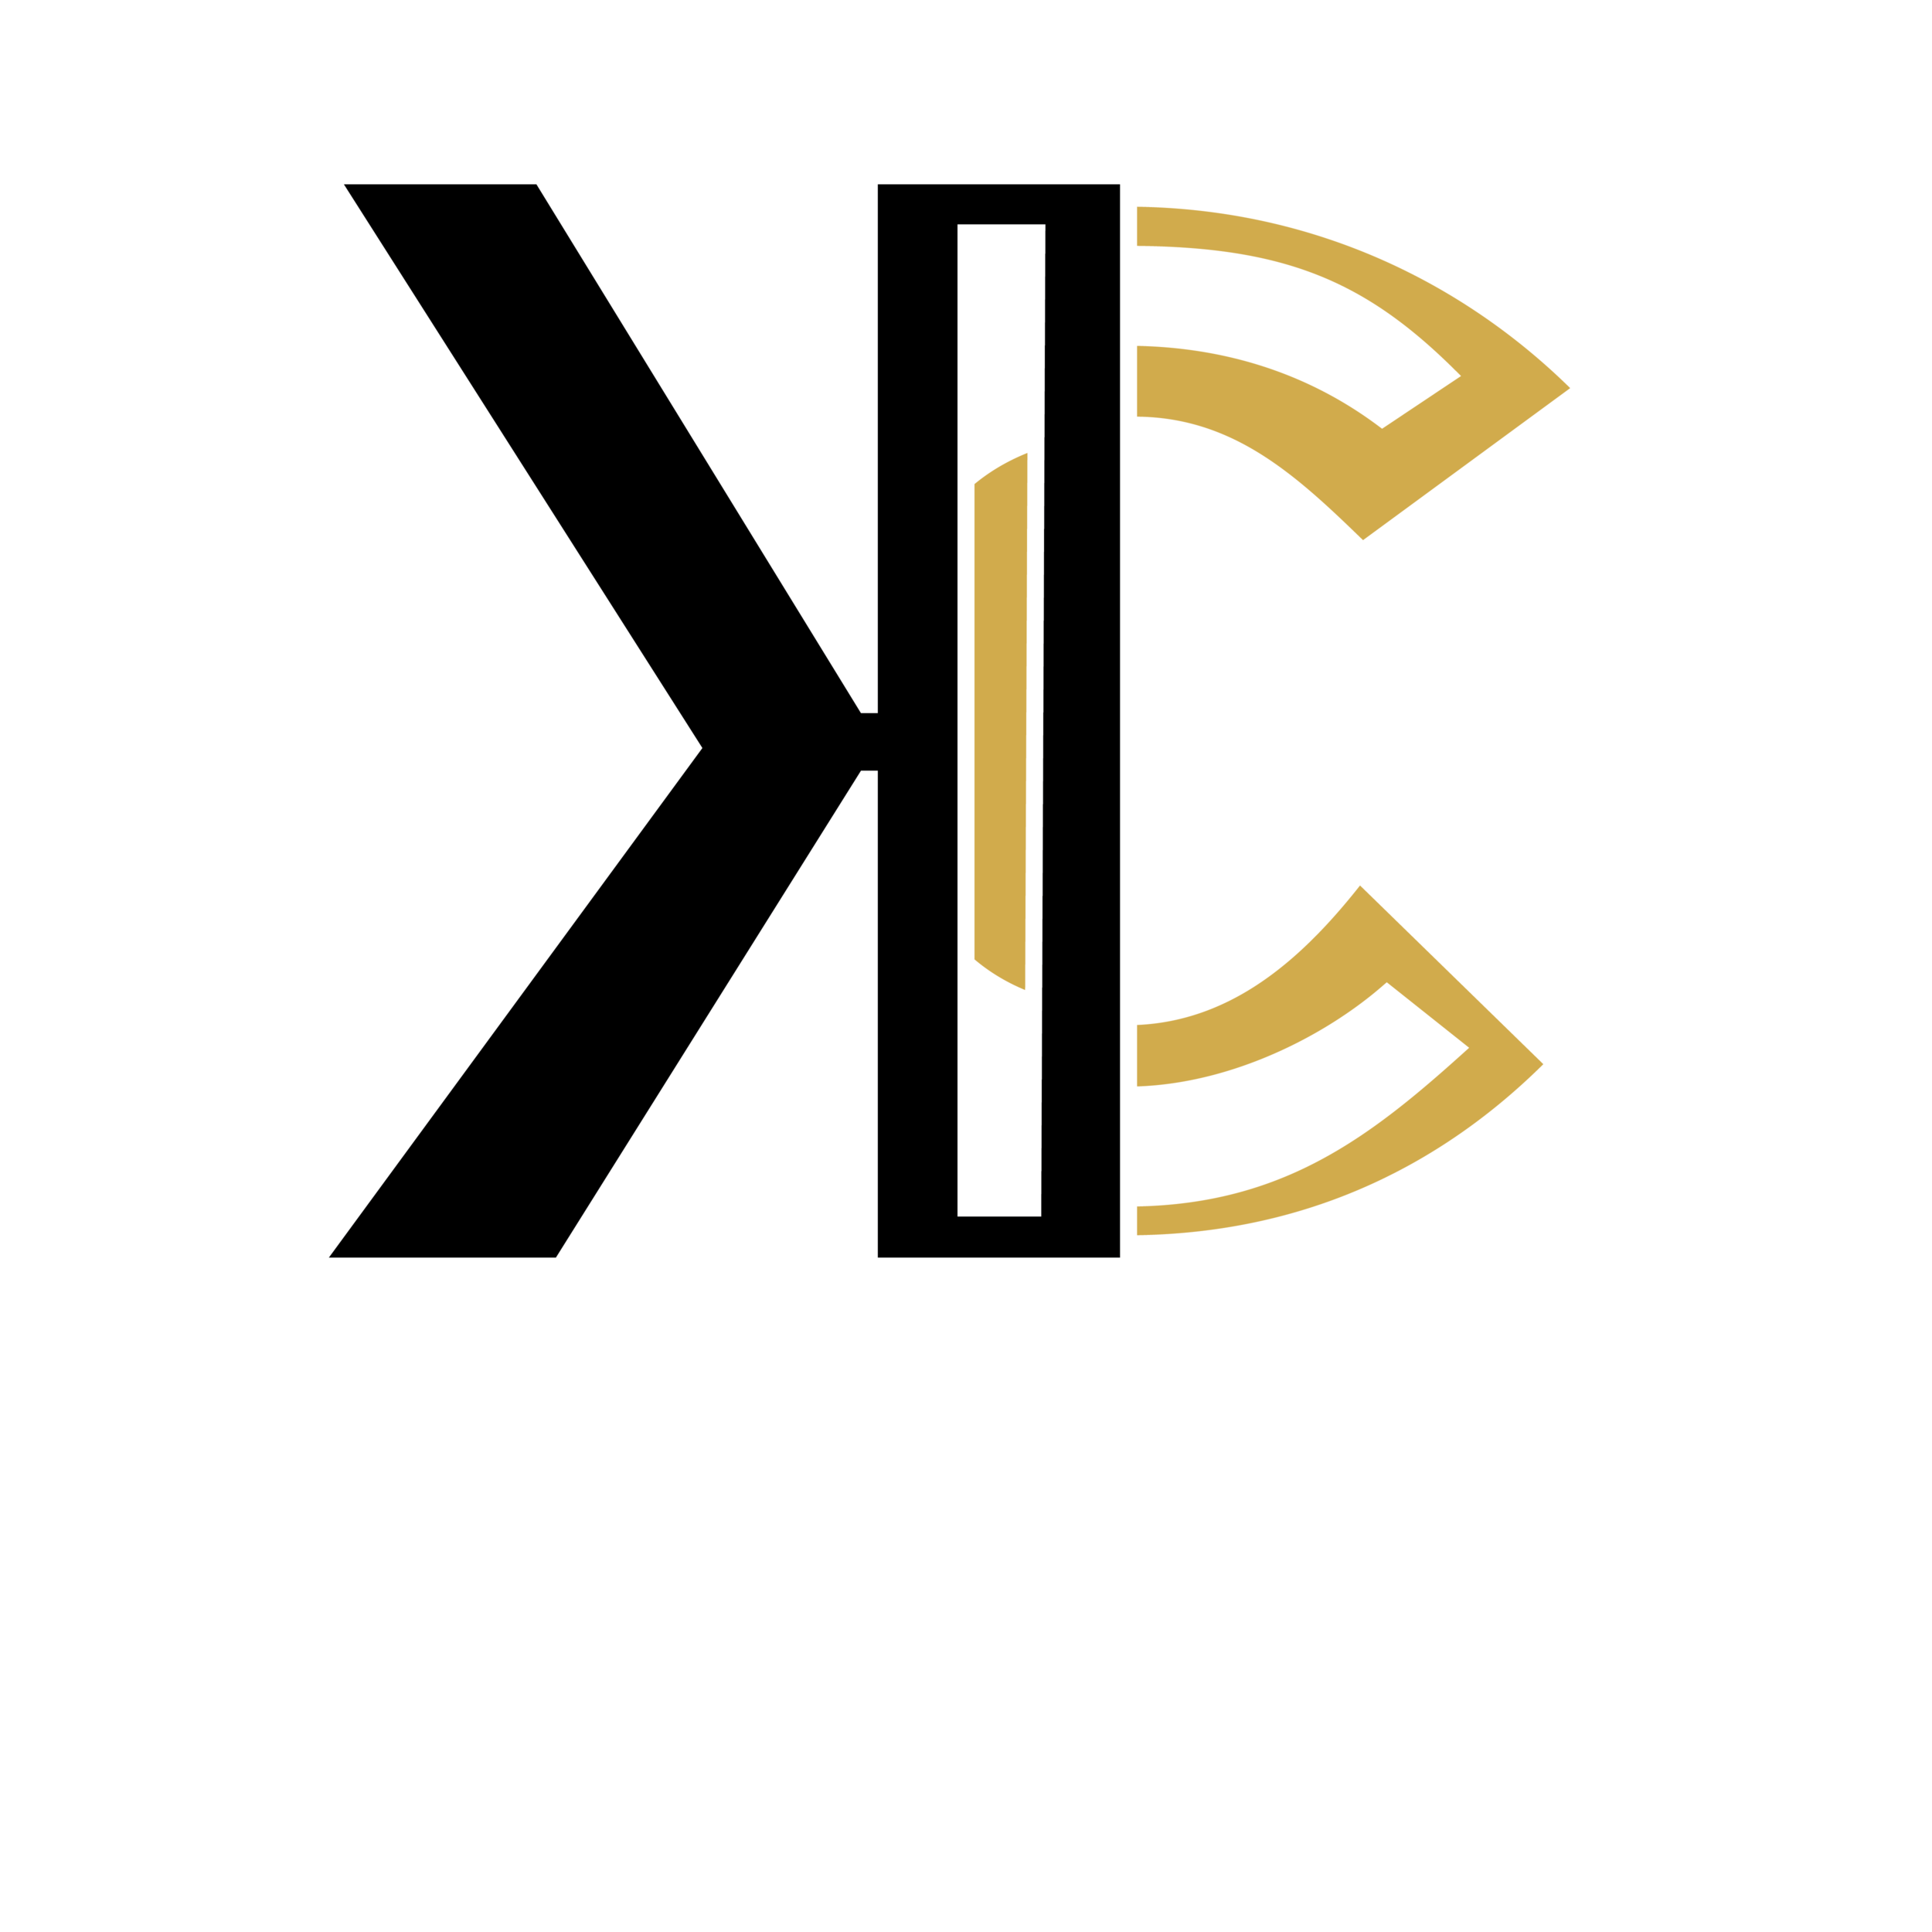 Saul Kattan / Kattan Consulting